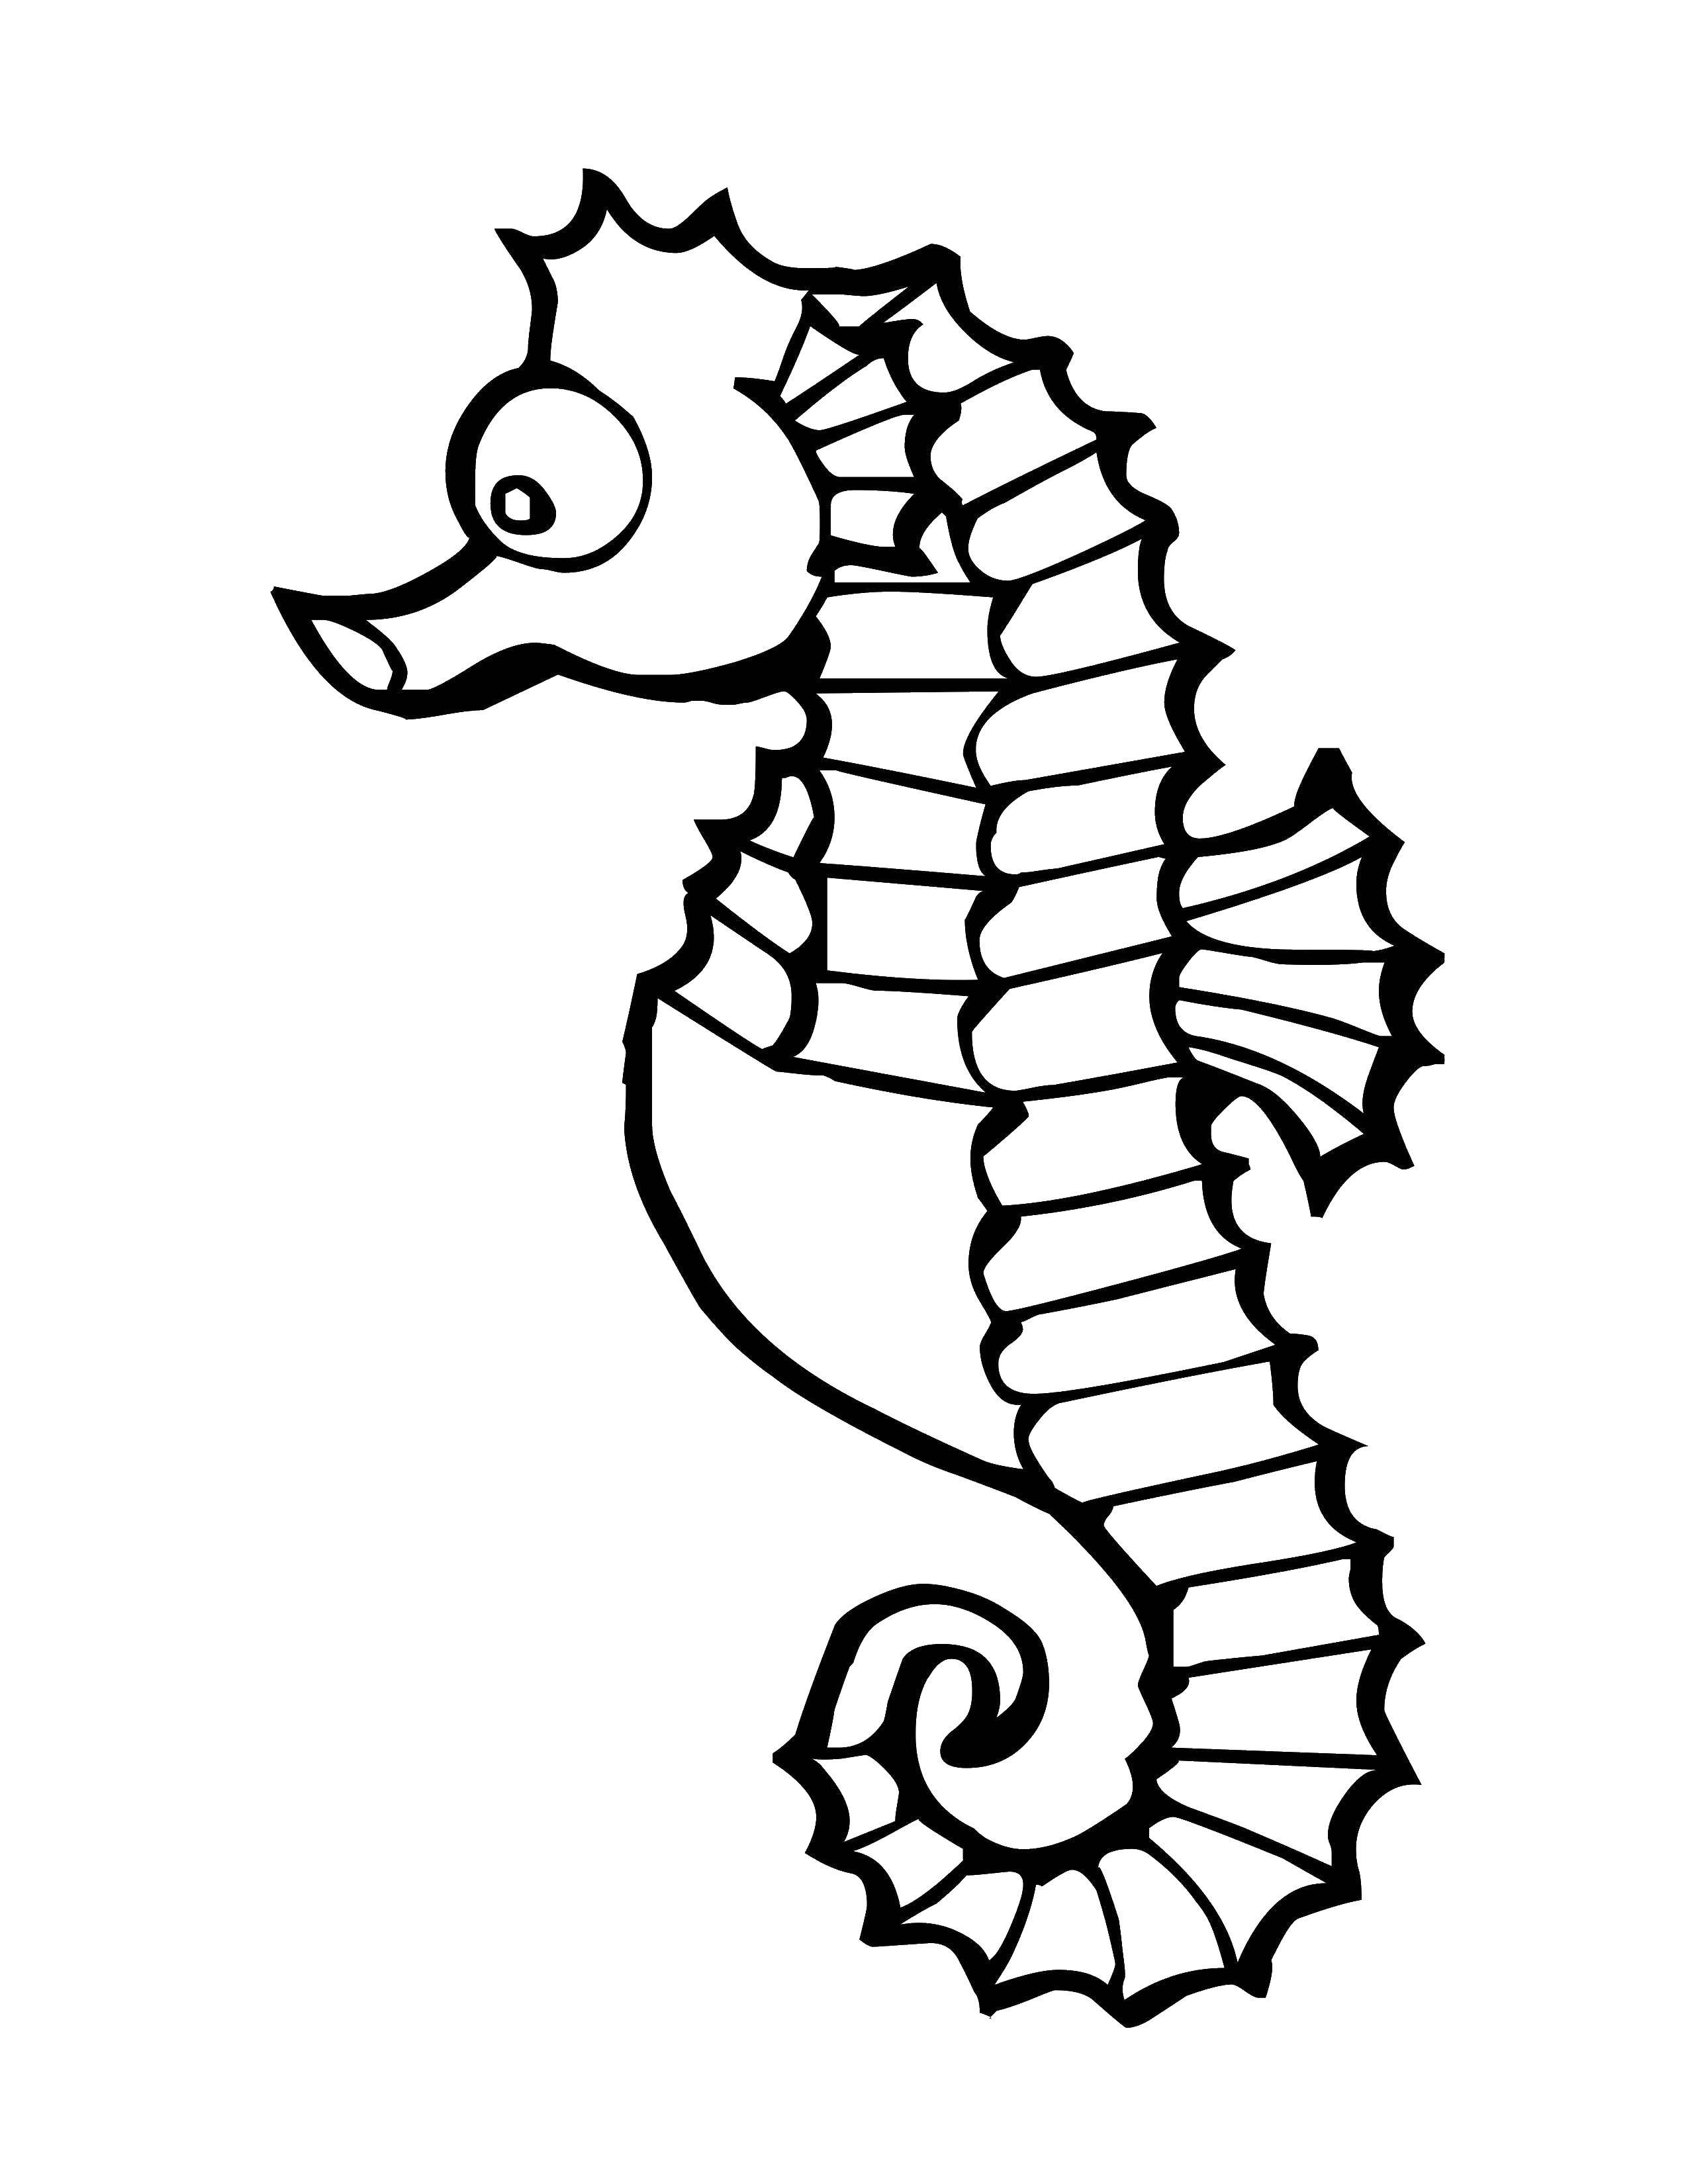 Coloring Seahorse. Category sea animals. Tags:  sea, water, seahorse.